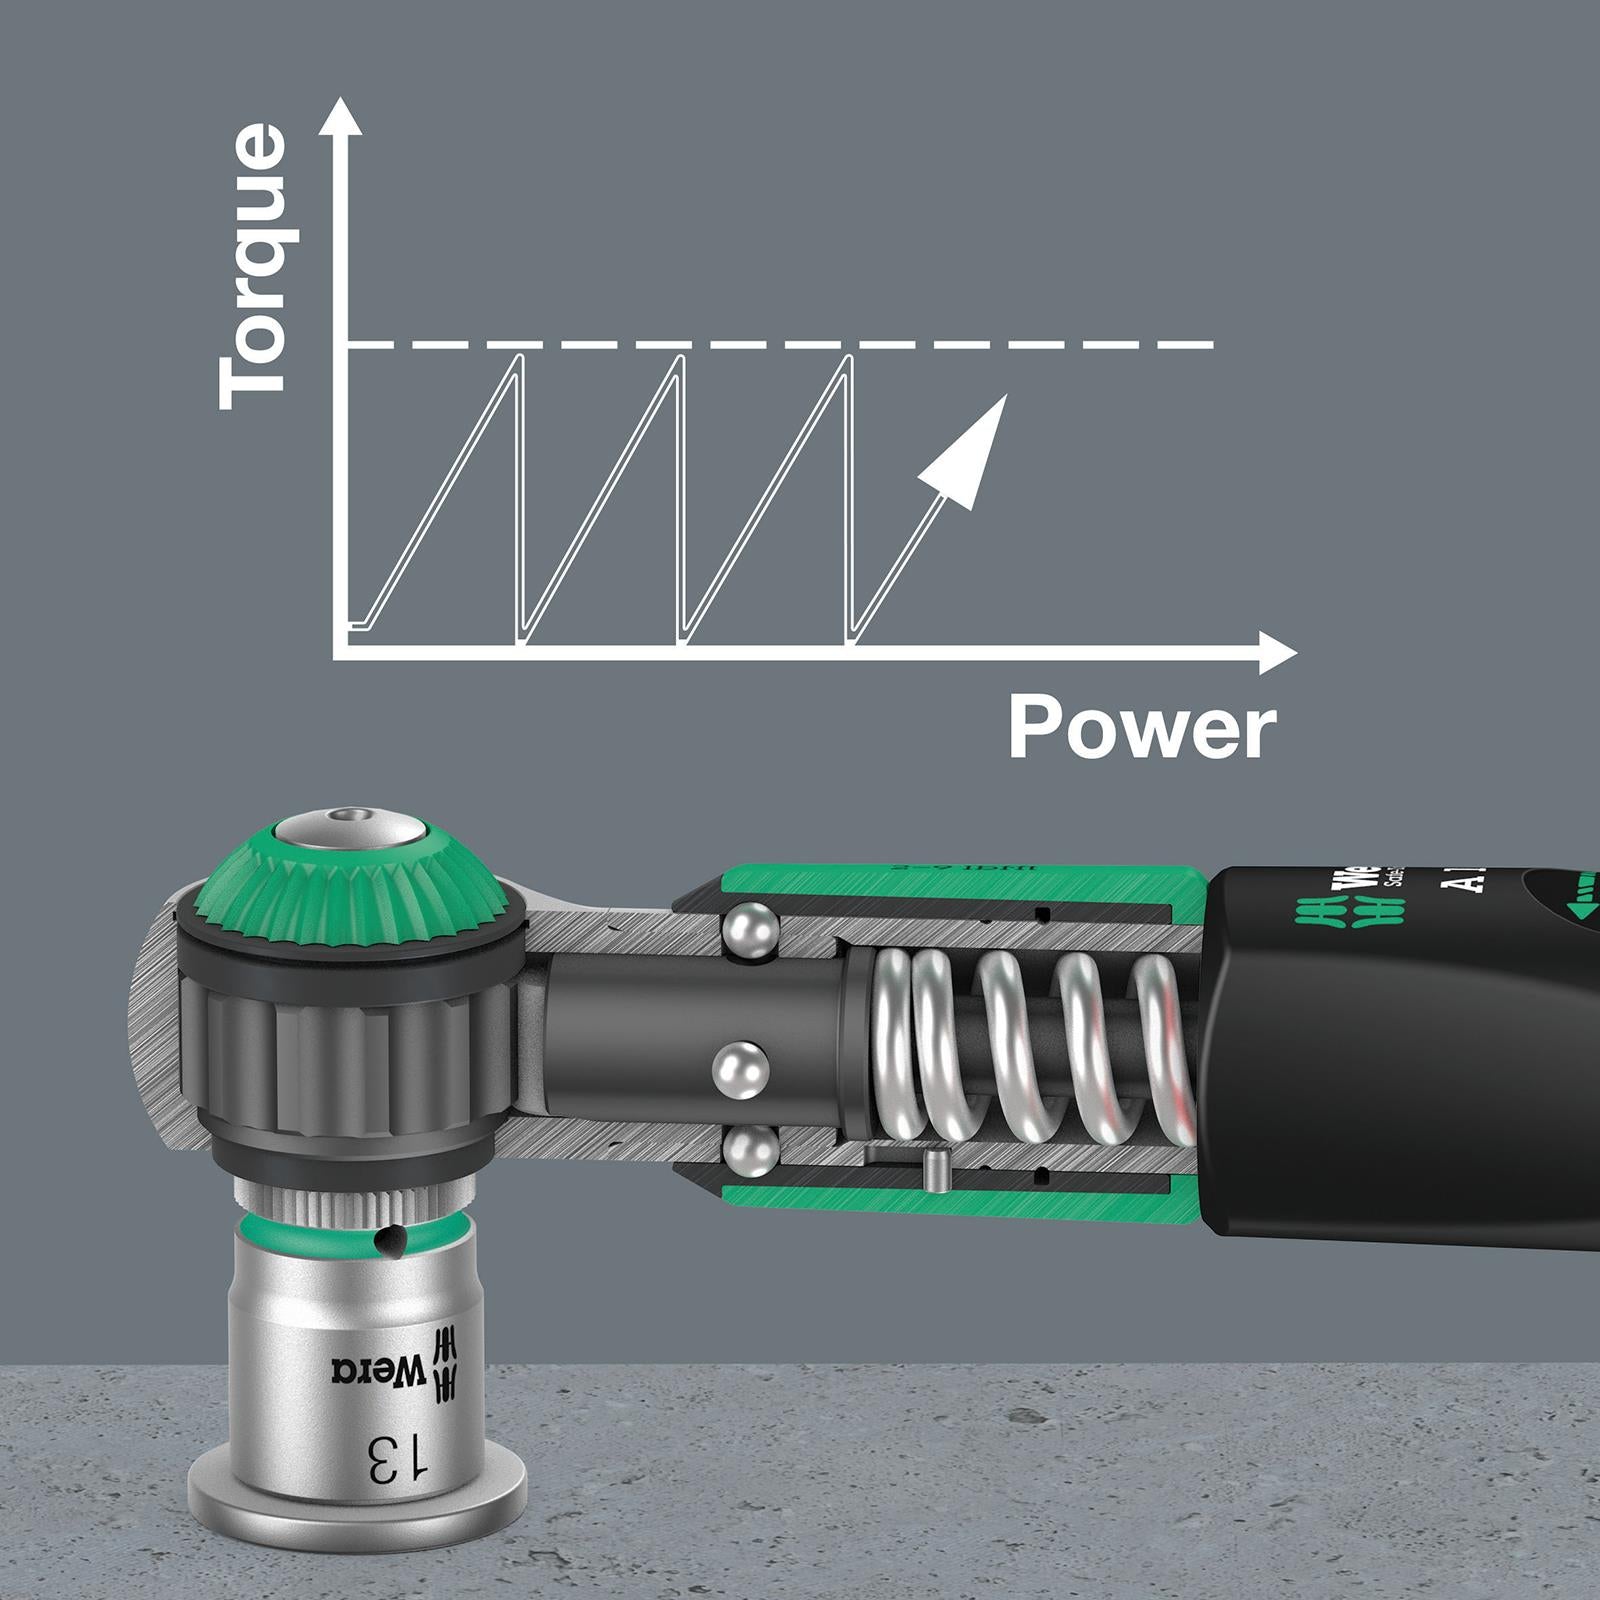 Wera Torque Wrench Safe-Torque A 1 Set 1 1/4" Drive 2-12 Nm 10 Pieces Reversible